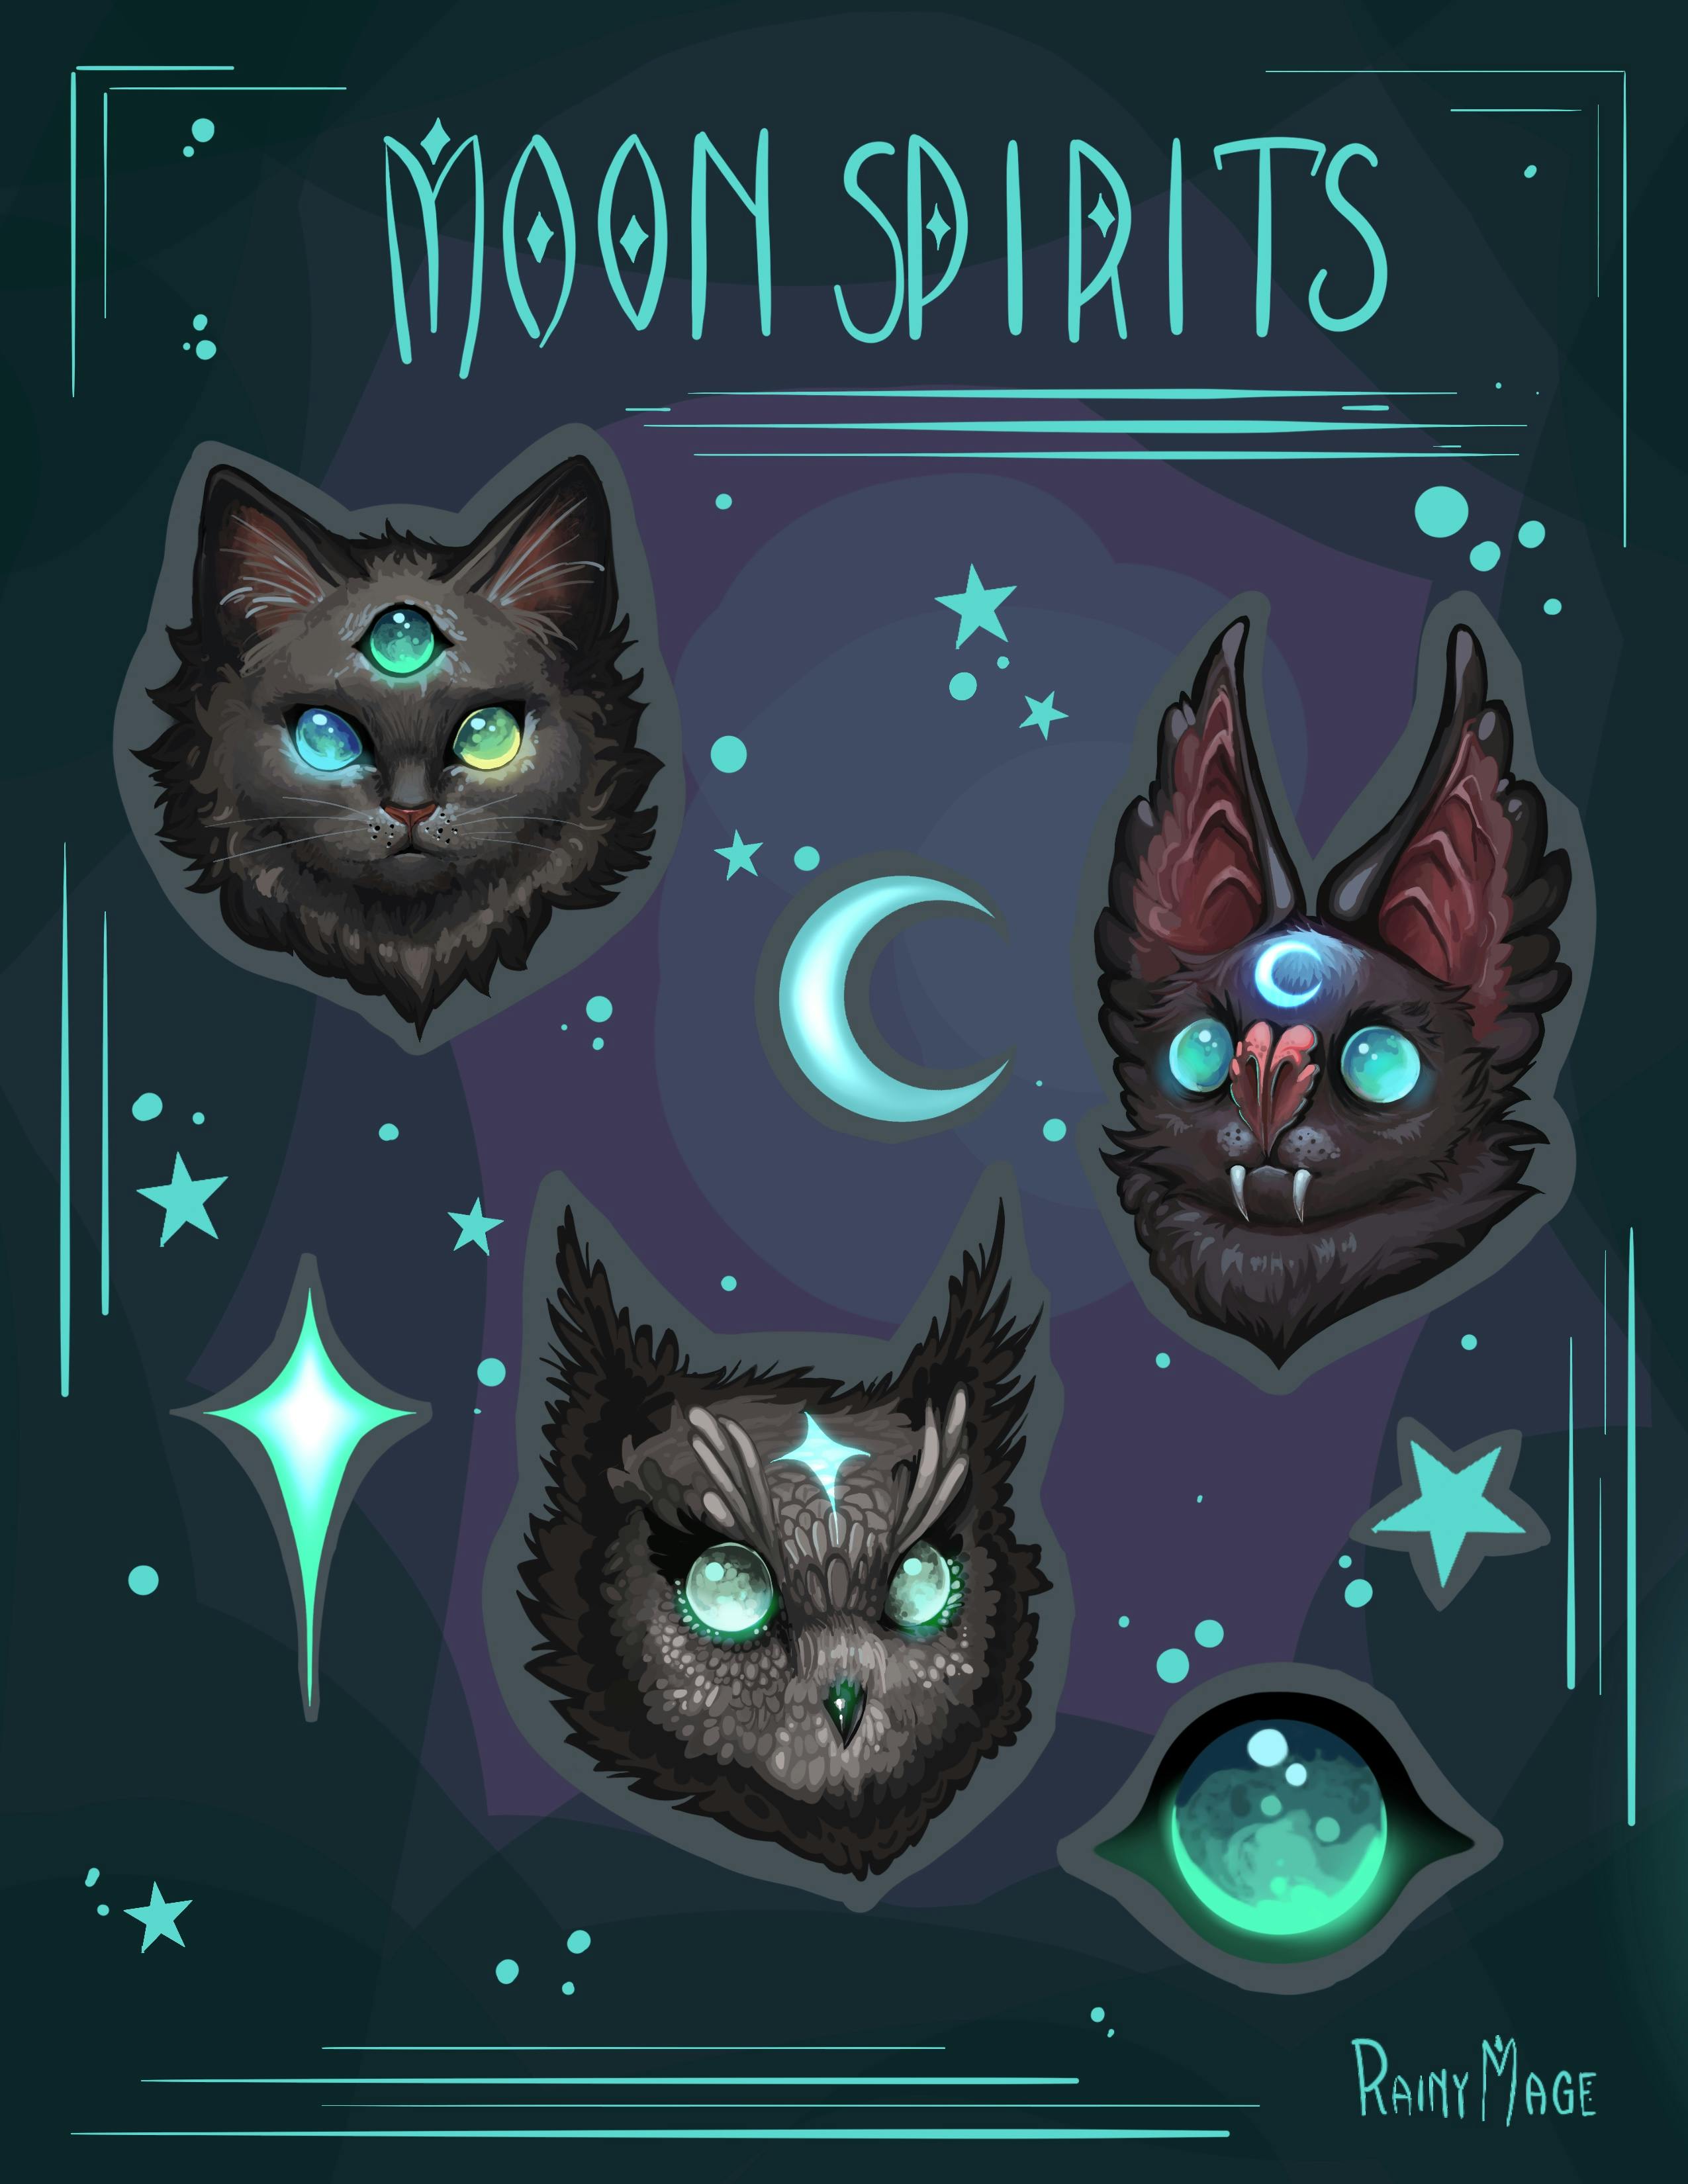 Moon spirits